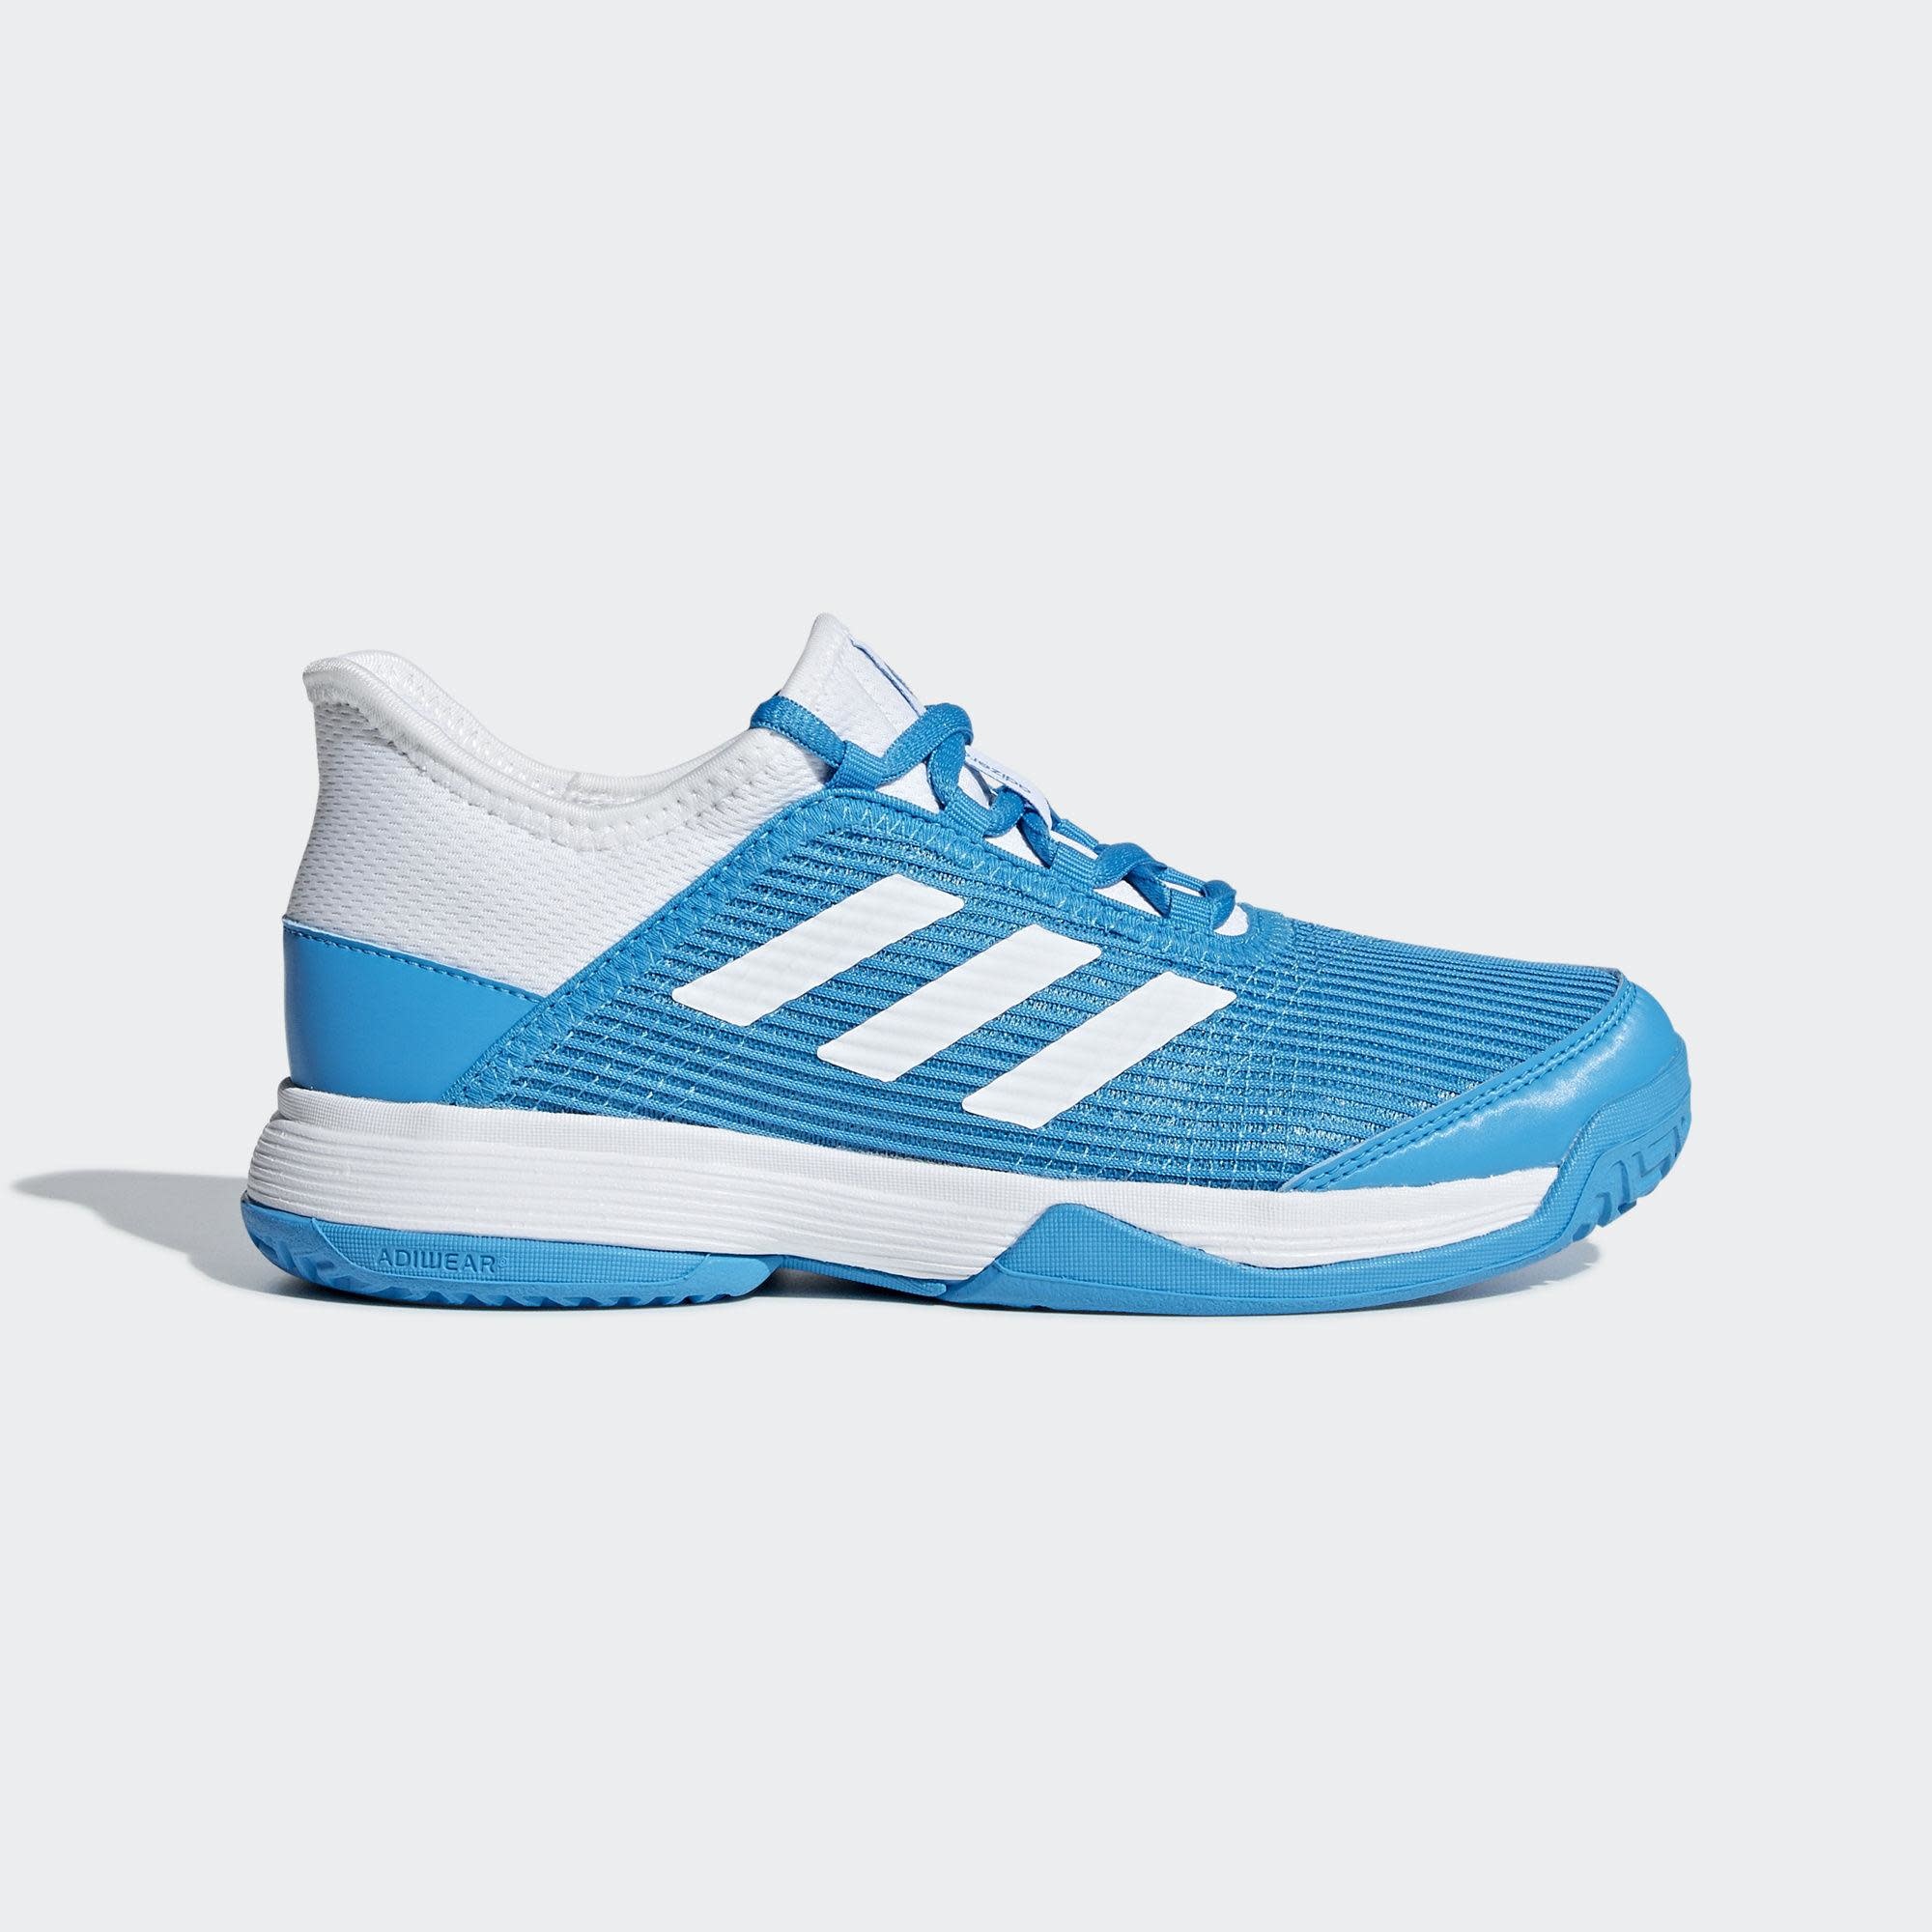  Adidas  Adizero  Club Junior Tennis Shoes  2021 Gannon Sports